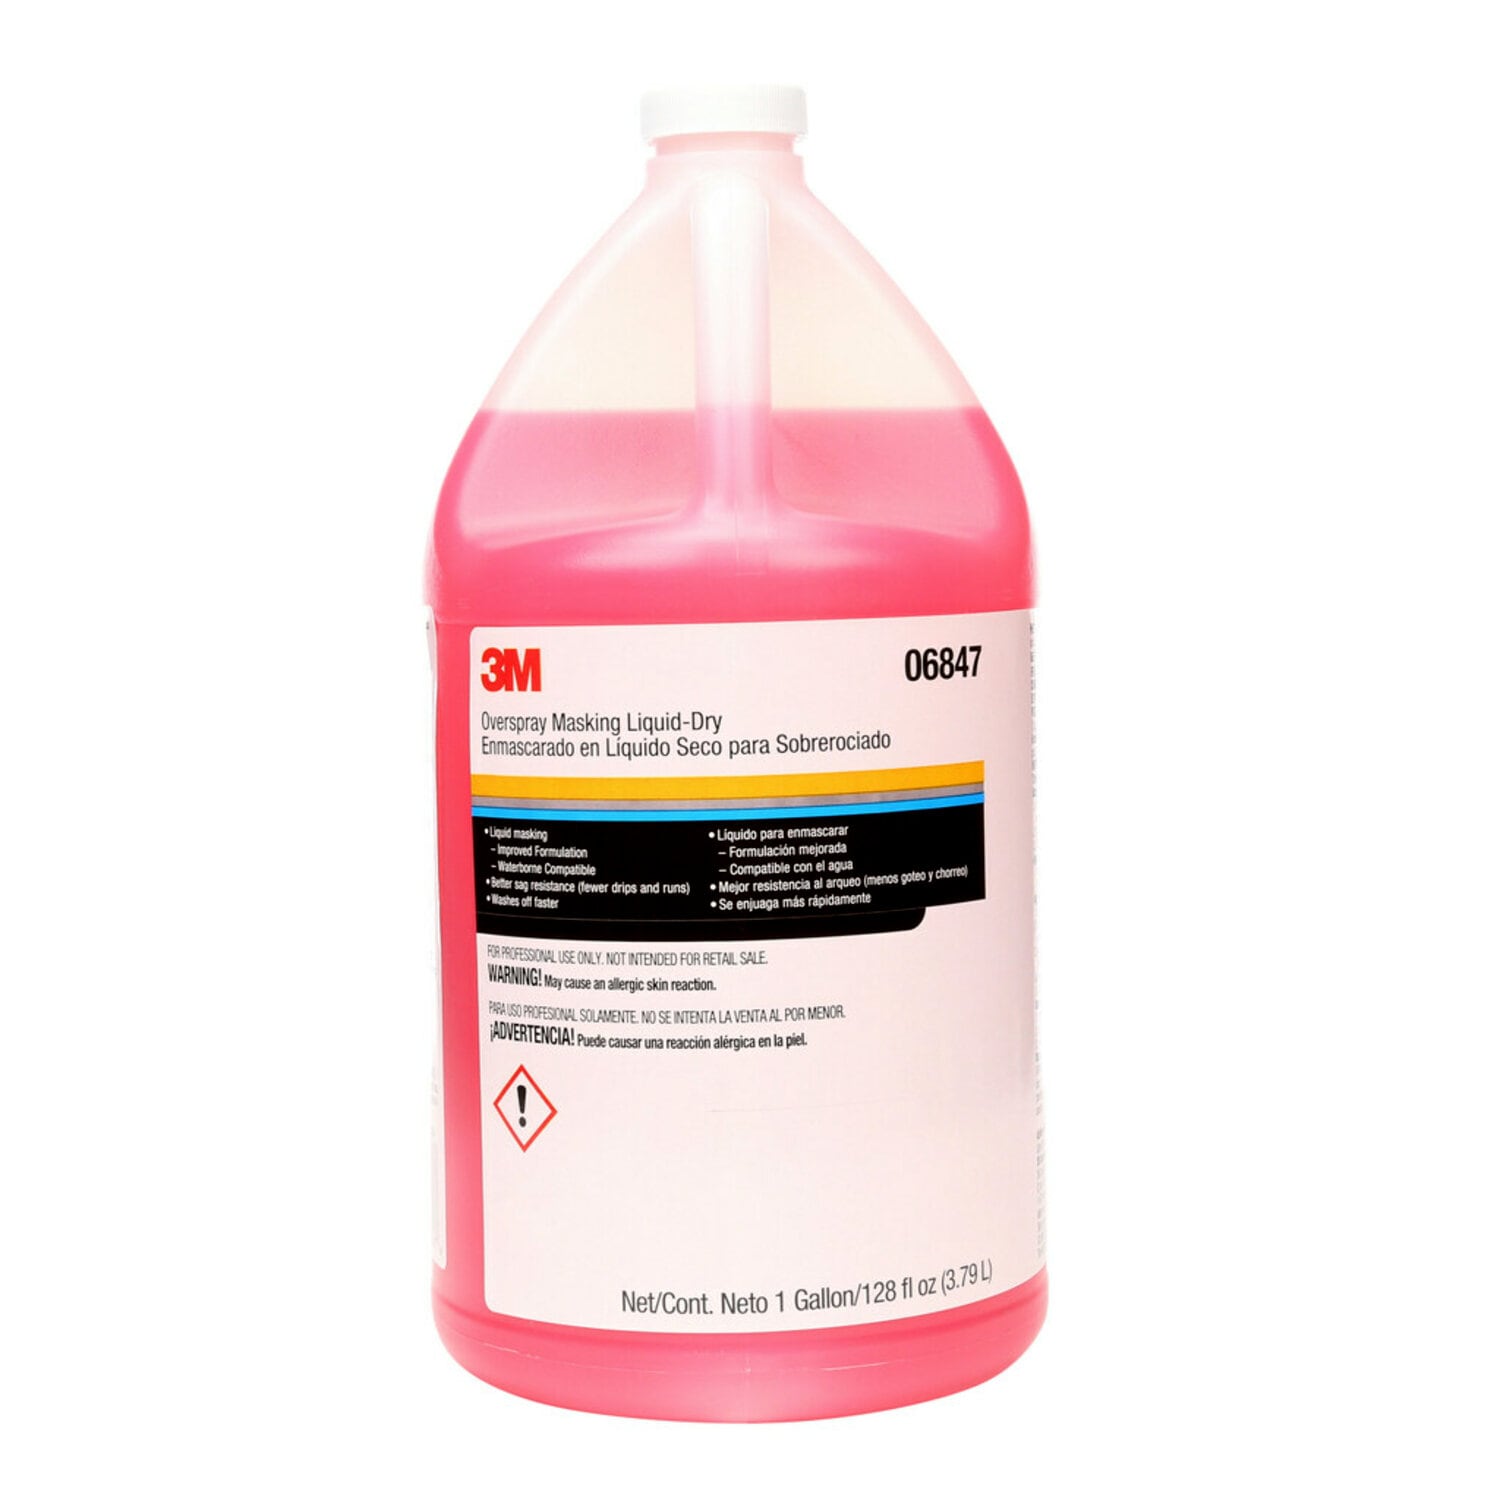 7010309222 - 3M Overspray Masking Liquid Dry, 06847, 1 Gallon, 4 per case